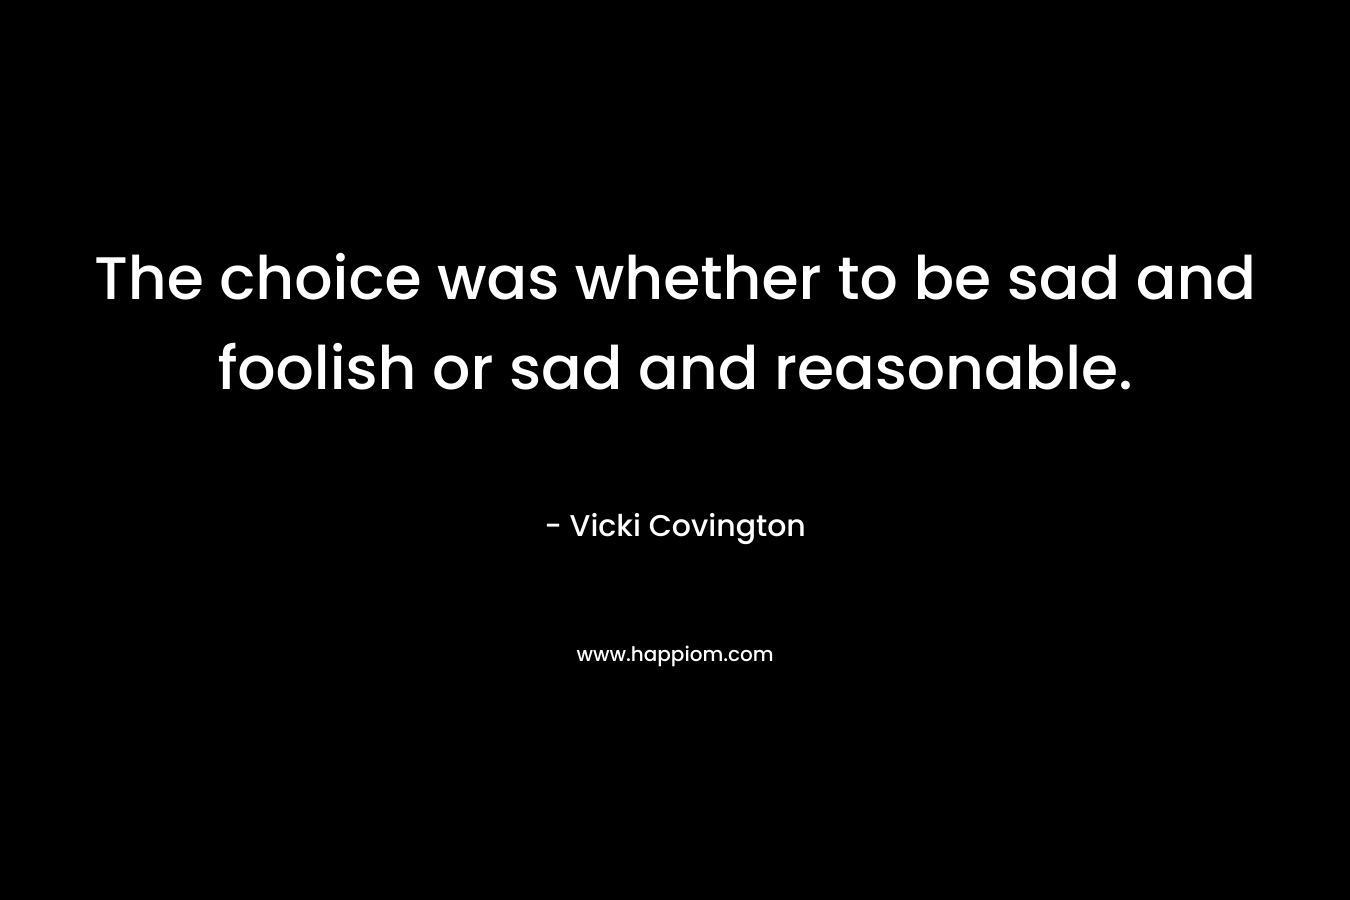 The choice was whether to be sad and foolish or sad and reasonable.